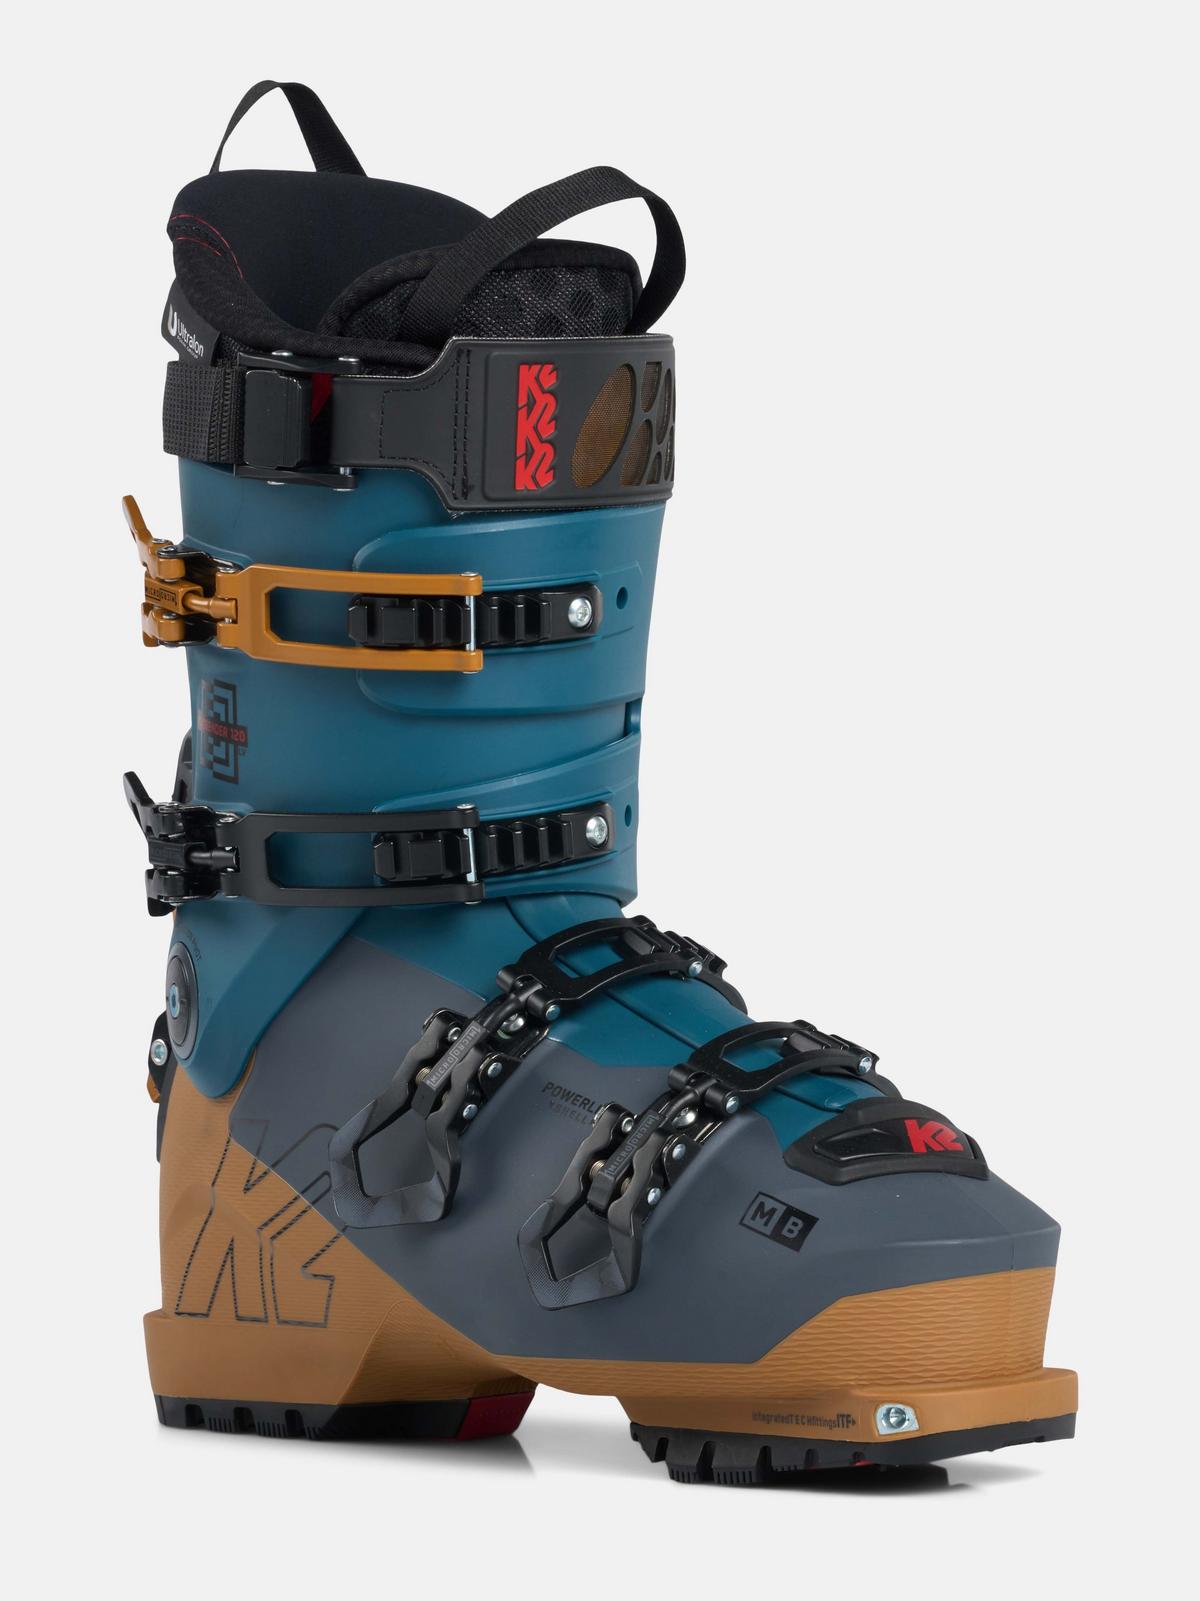 Boots - F/S: K2 mindbender 120 ski boots, 2023 model, size 27.5, $690